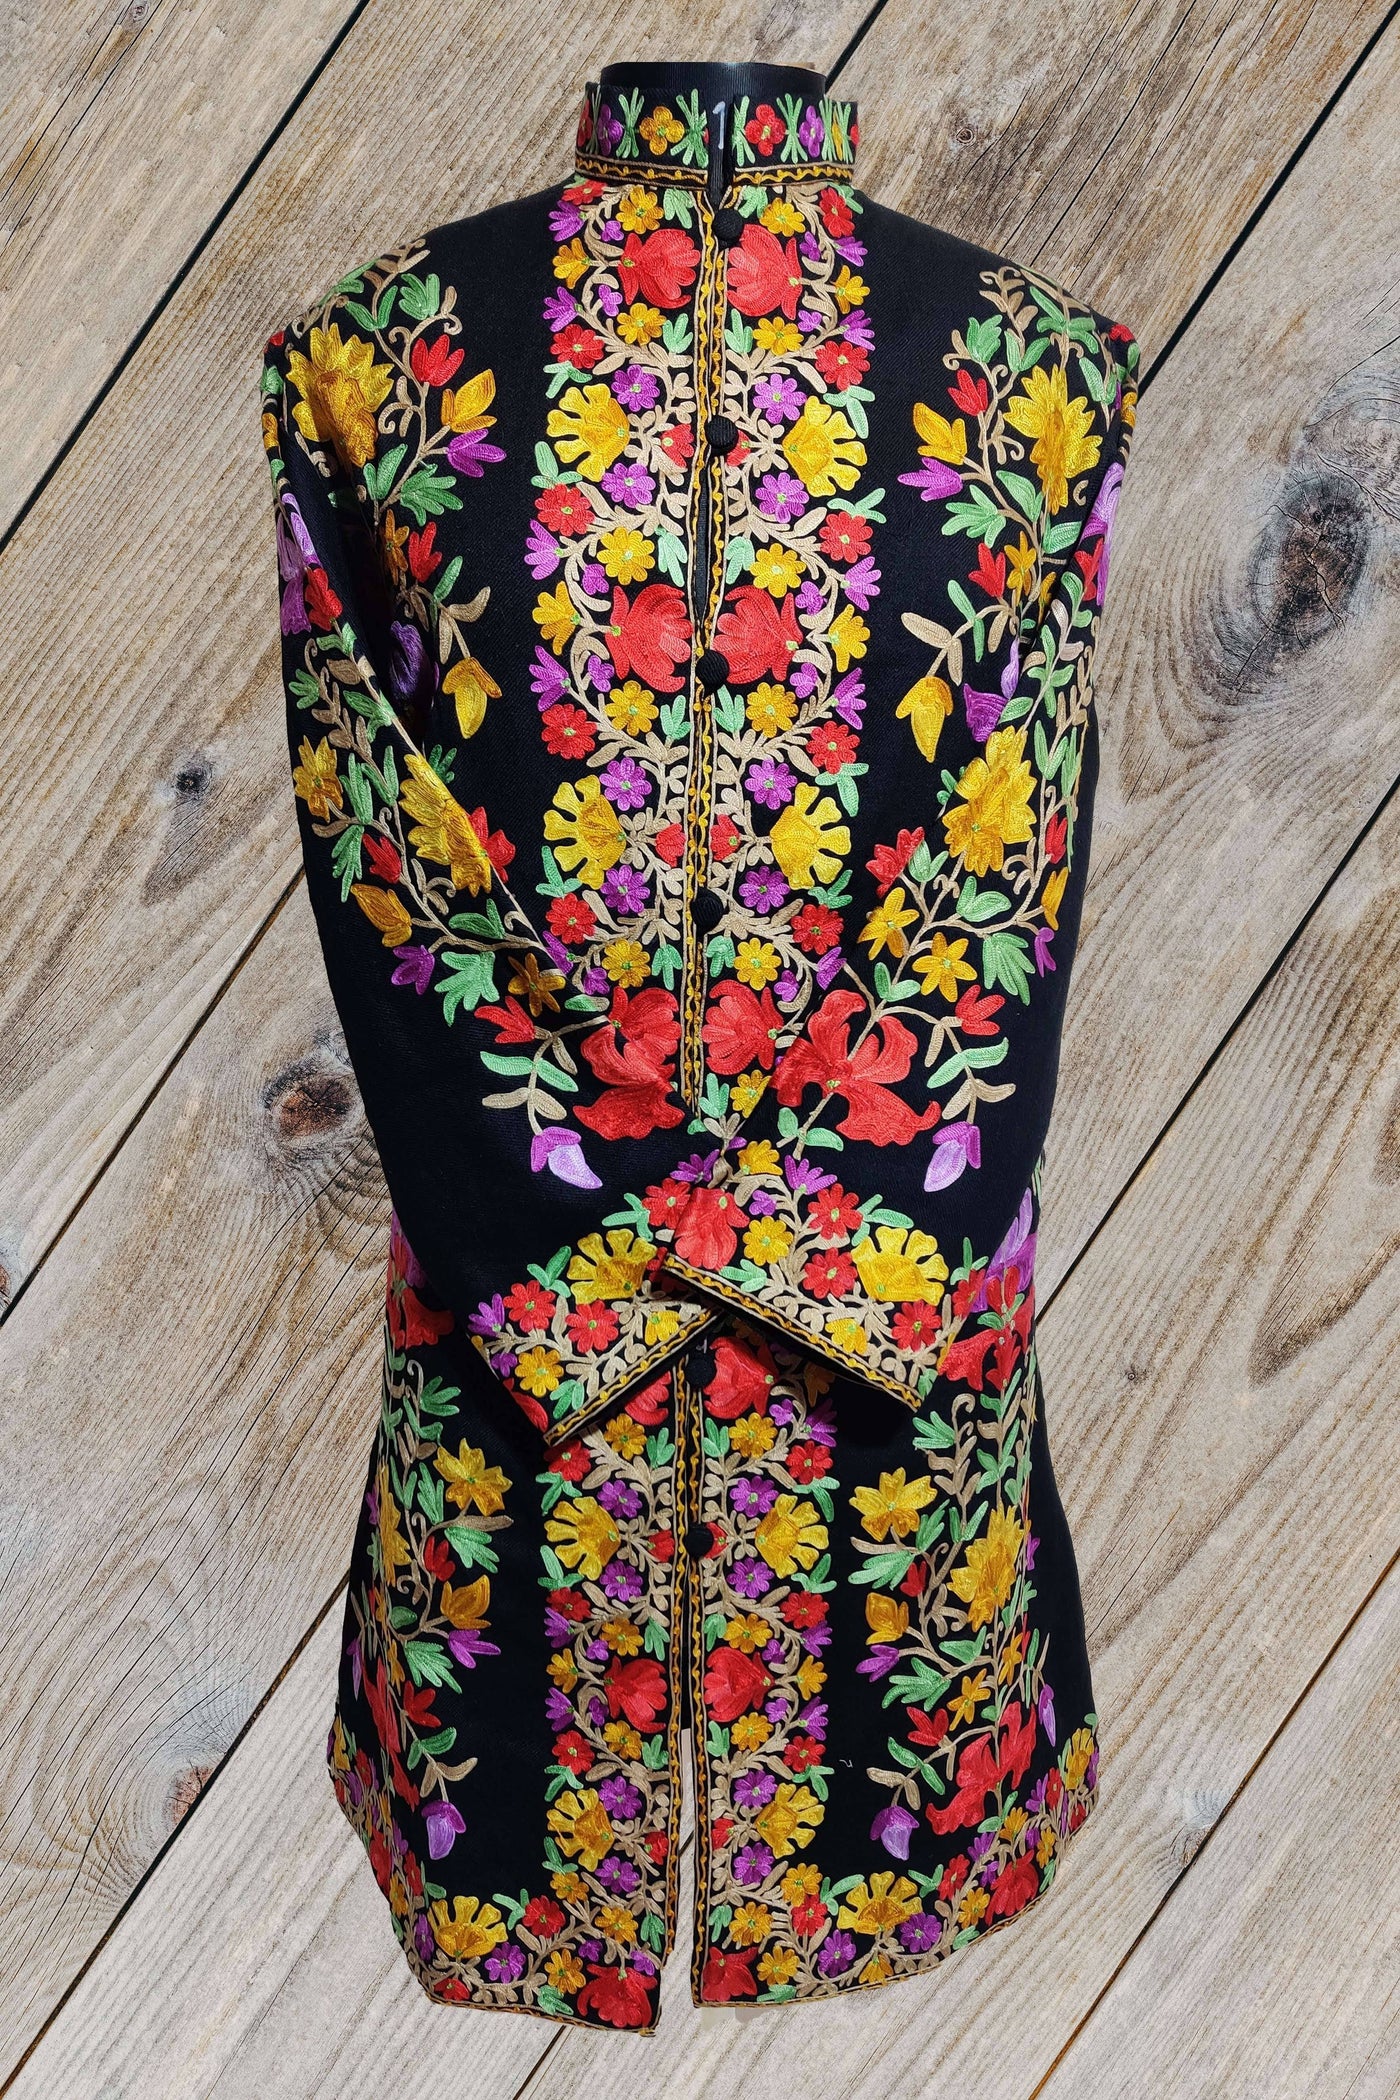 Kashmir Thread Coat XXL (46) Long Kashmiri Woolen Jacket Multicolour Floral Embroidery